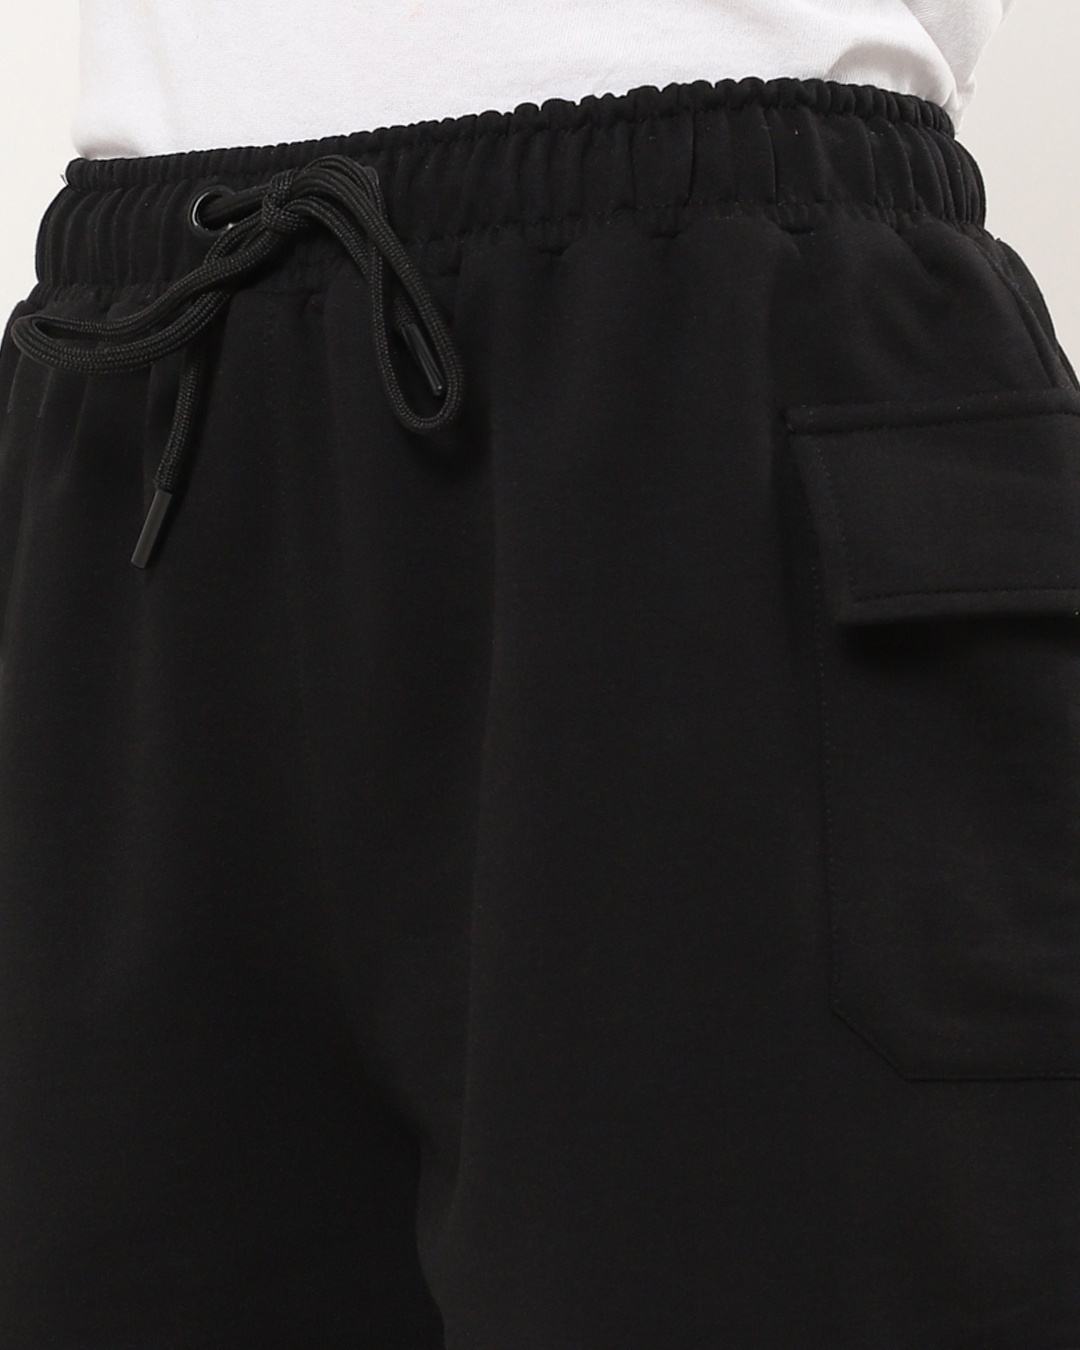 Shop Women's Black Cargo Pocket Shorts